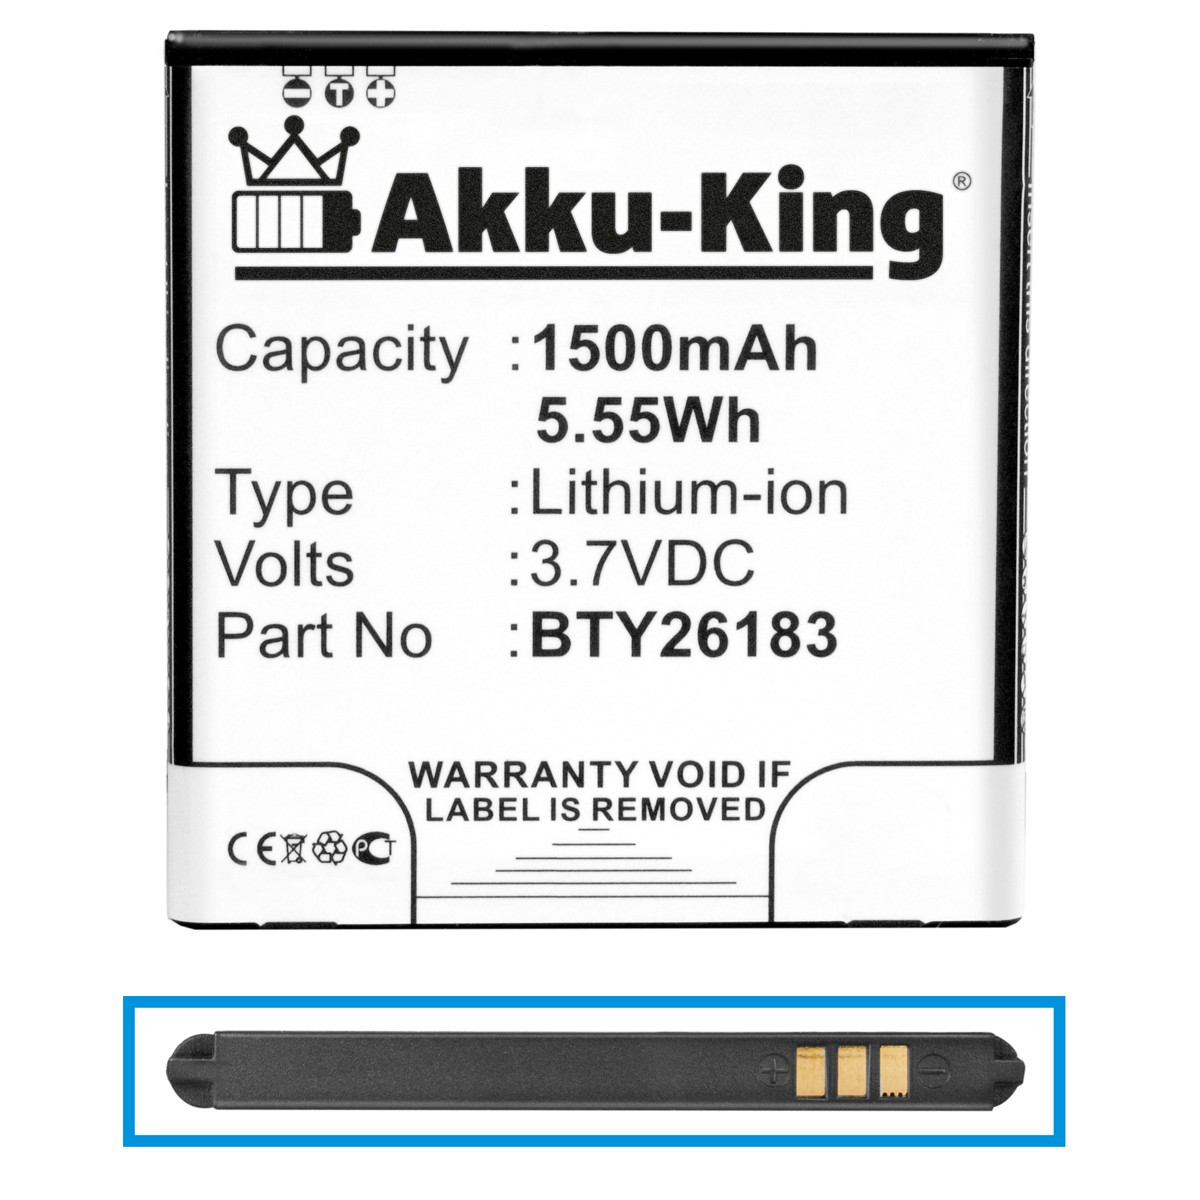 AKKU-KING Akku kompatibel BTY26183 3.7 Volt, 1500mAh Elson Li-Ion mit Handy-Akku